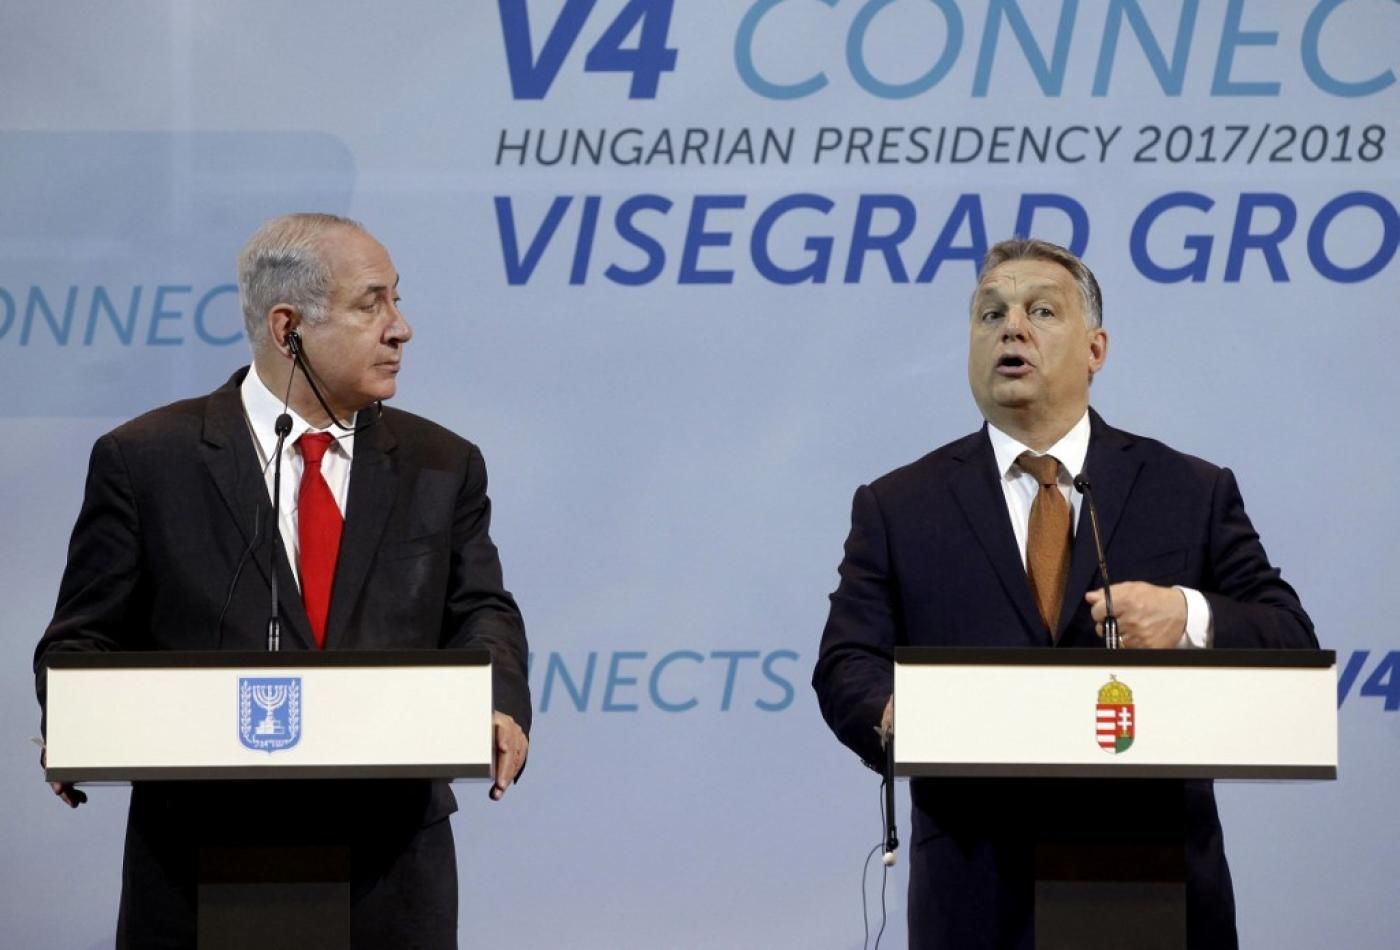 Pegasus spyware: Hungary and Poland 'bought software after Netanyahu meeting'